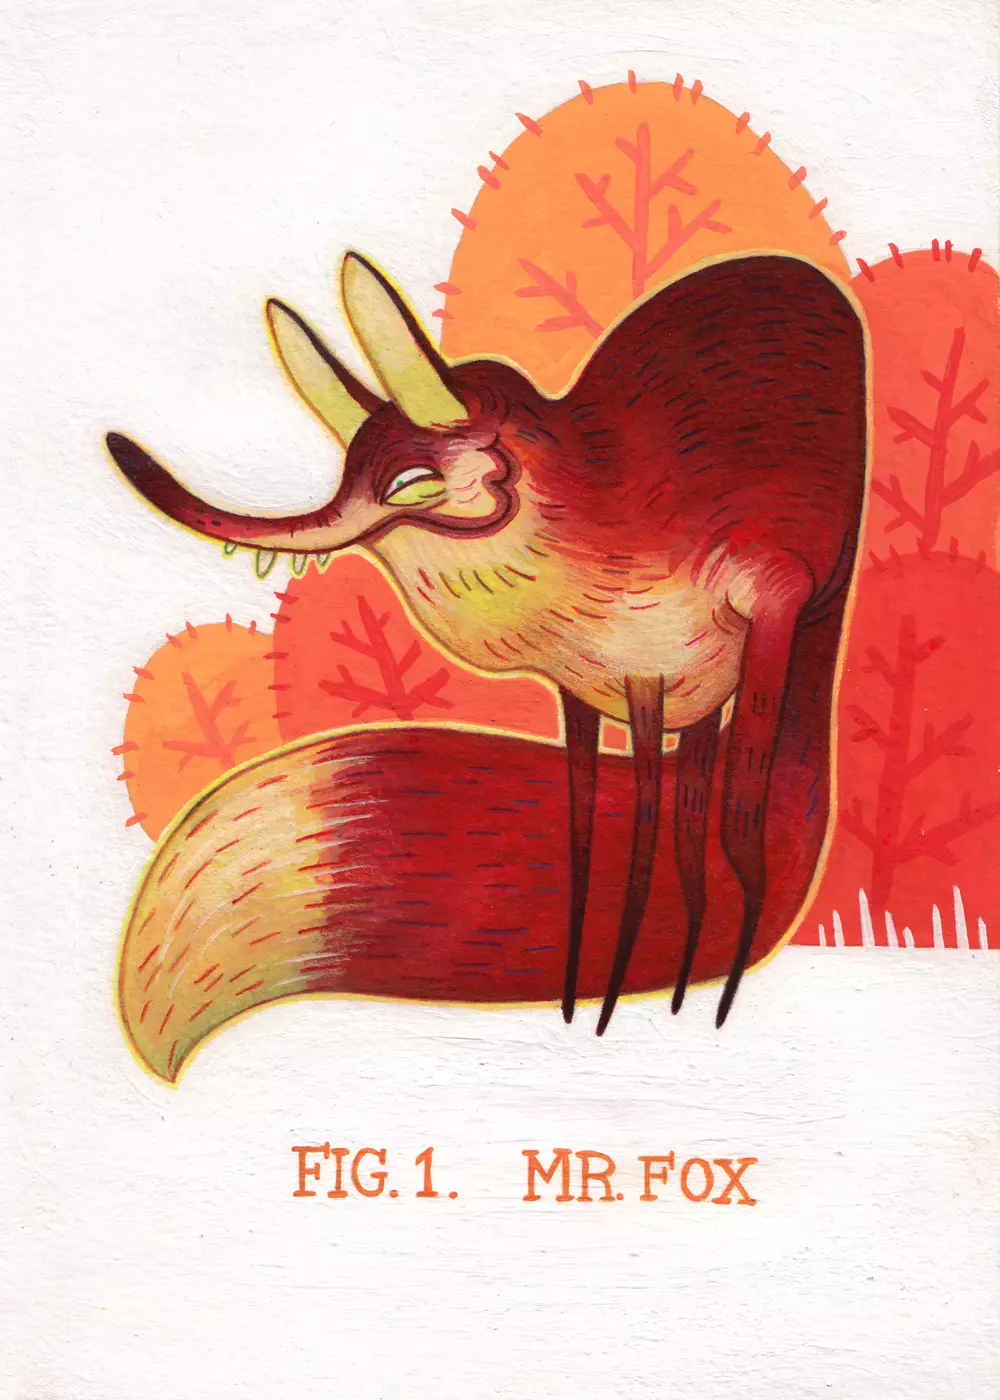 FIG. 1. MR. FOX, Tim Mack